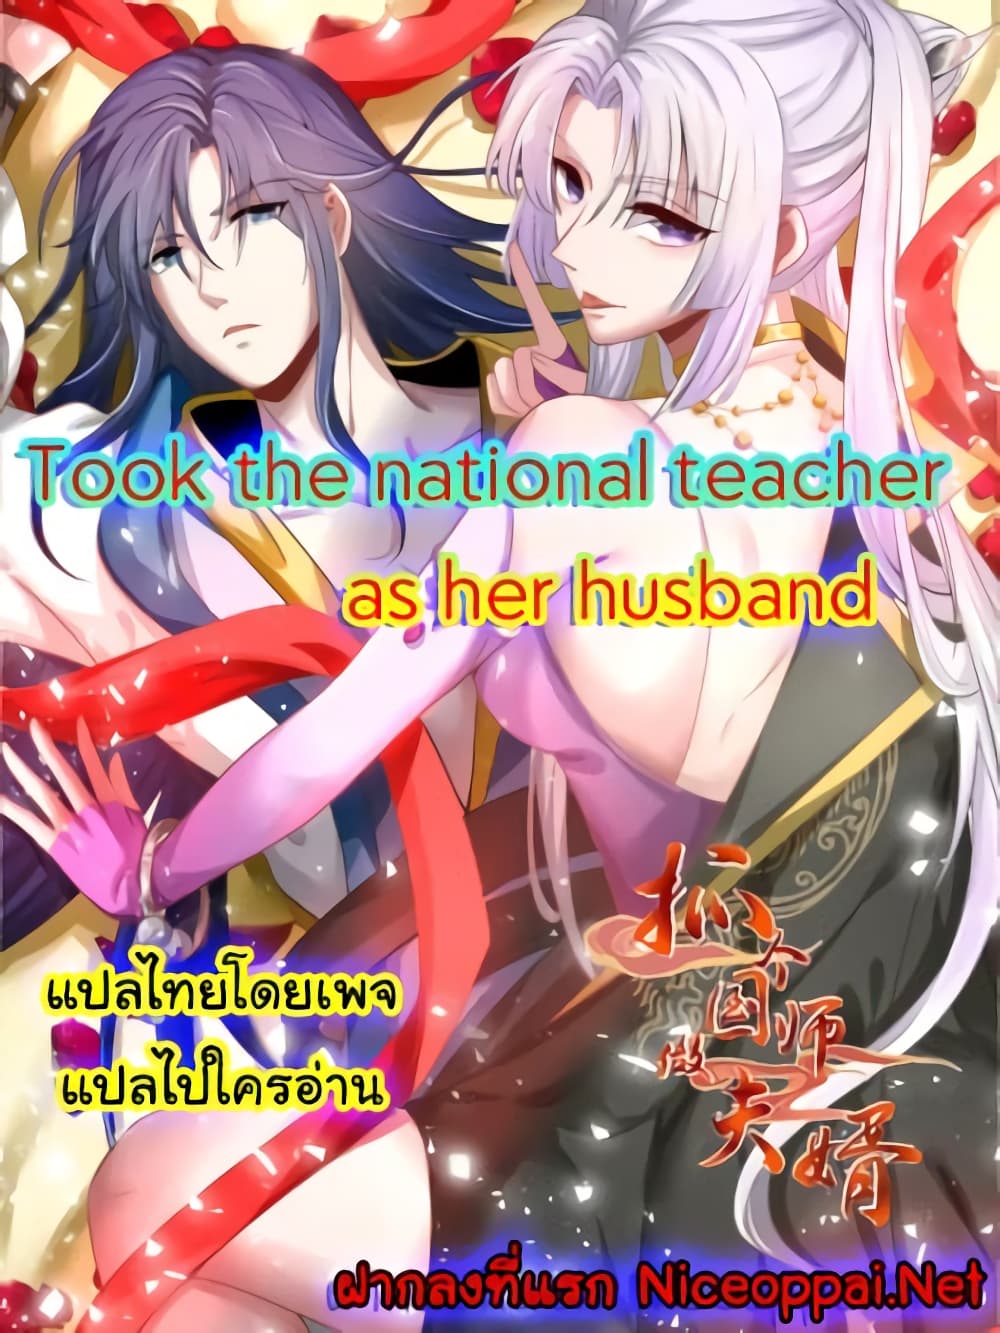 Took the National Teacher as Her Husband 38 (1)